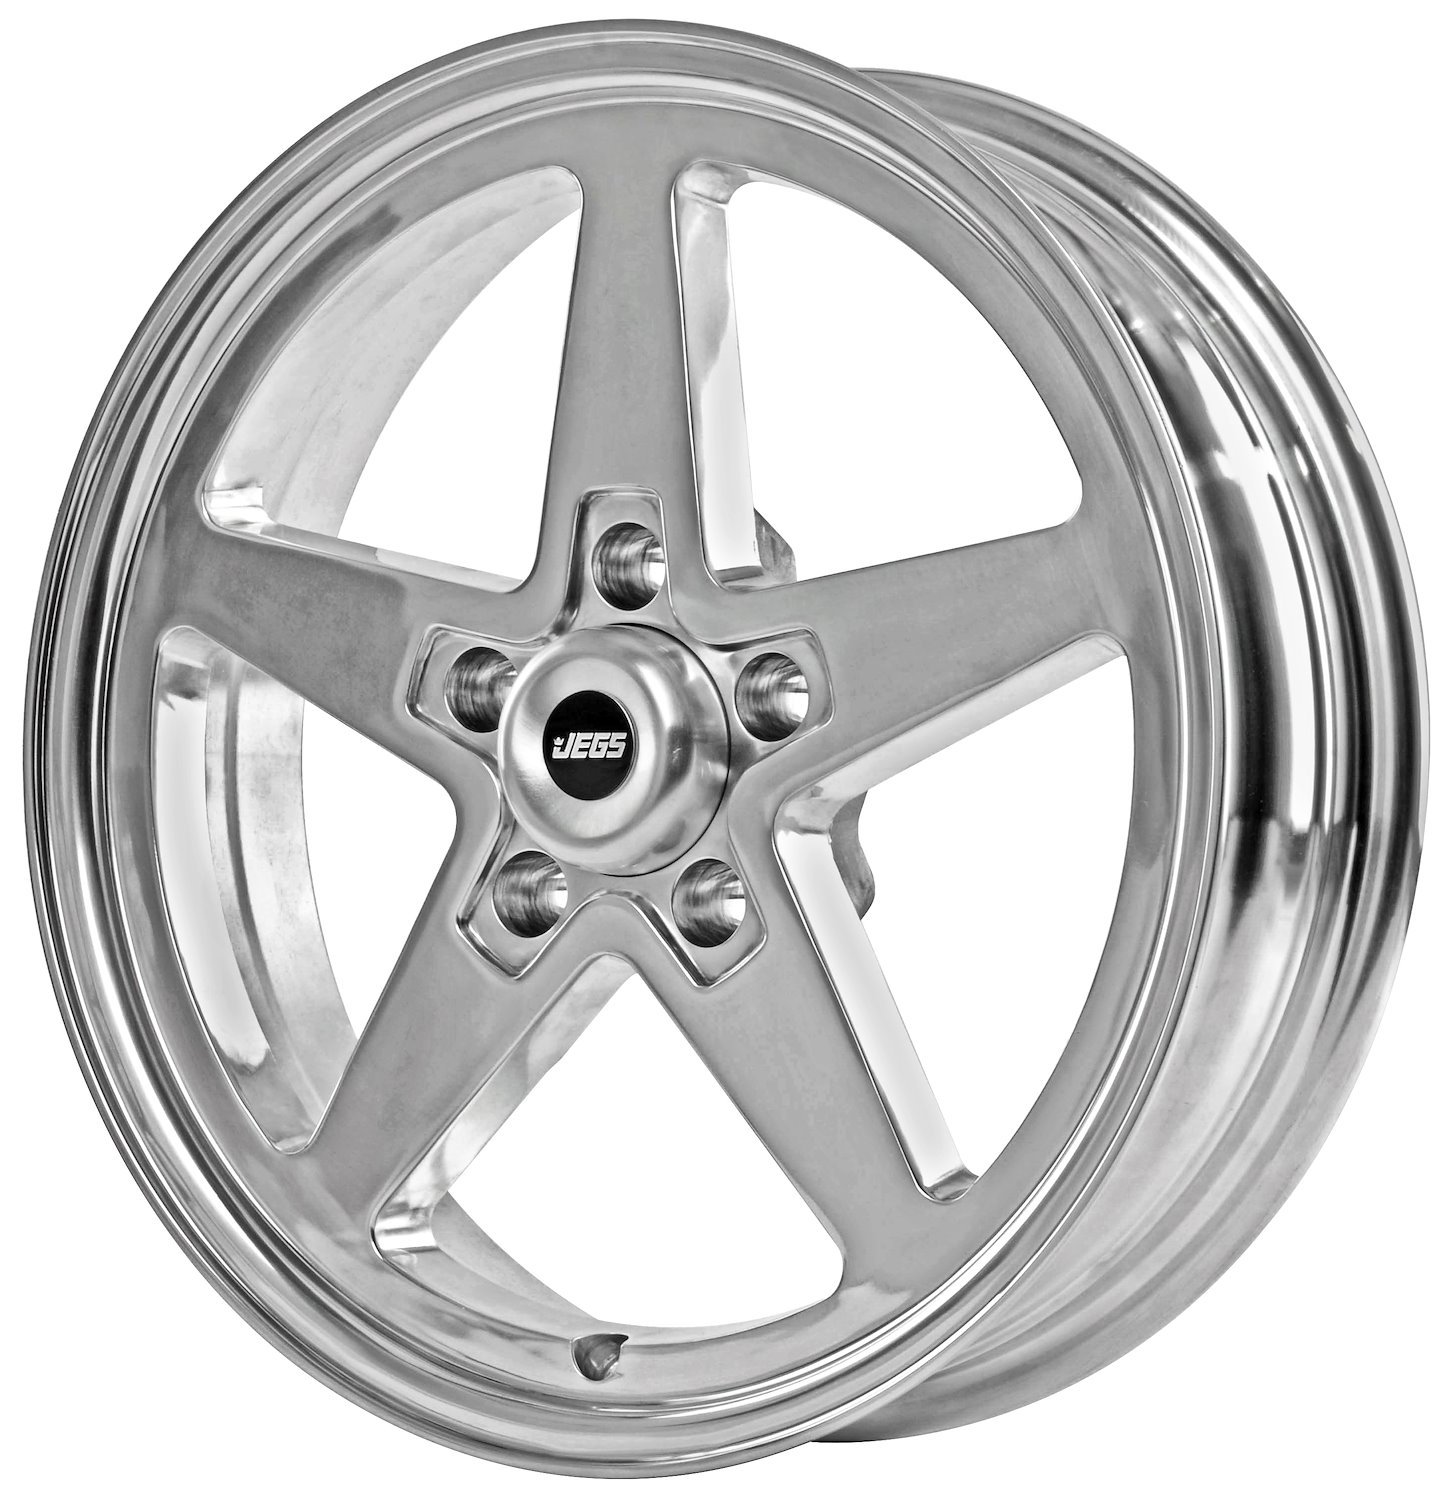 SSR Star Wheel [Size: 17" x 4.5"]